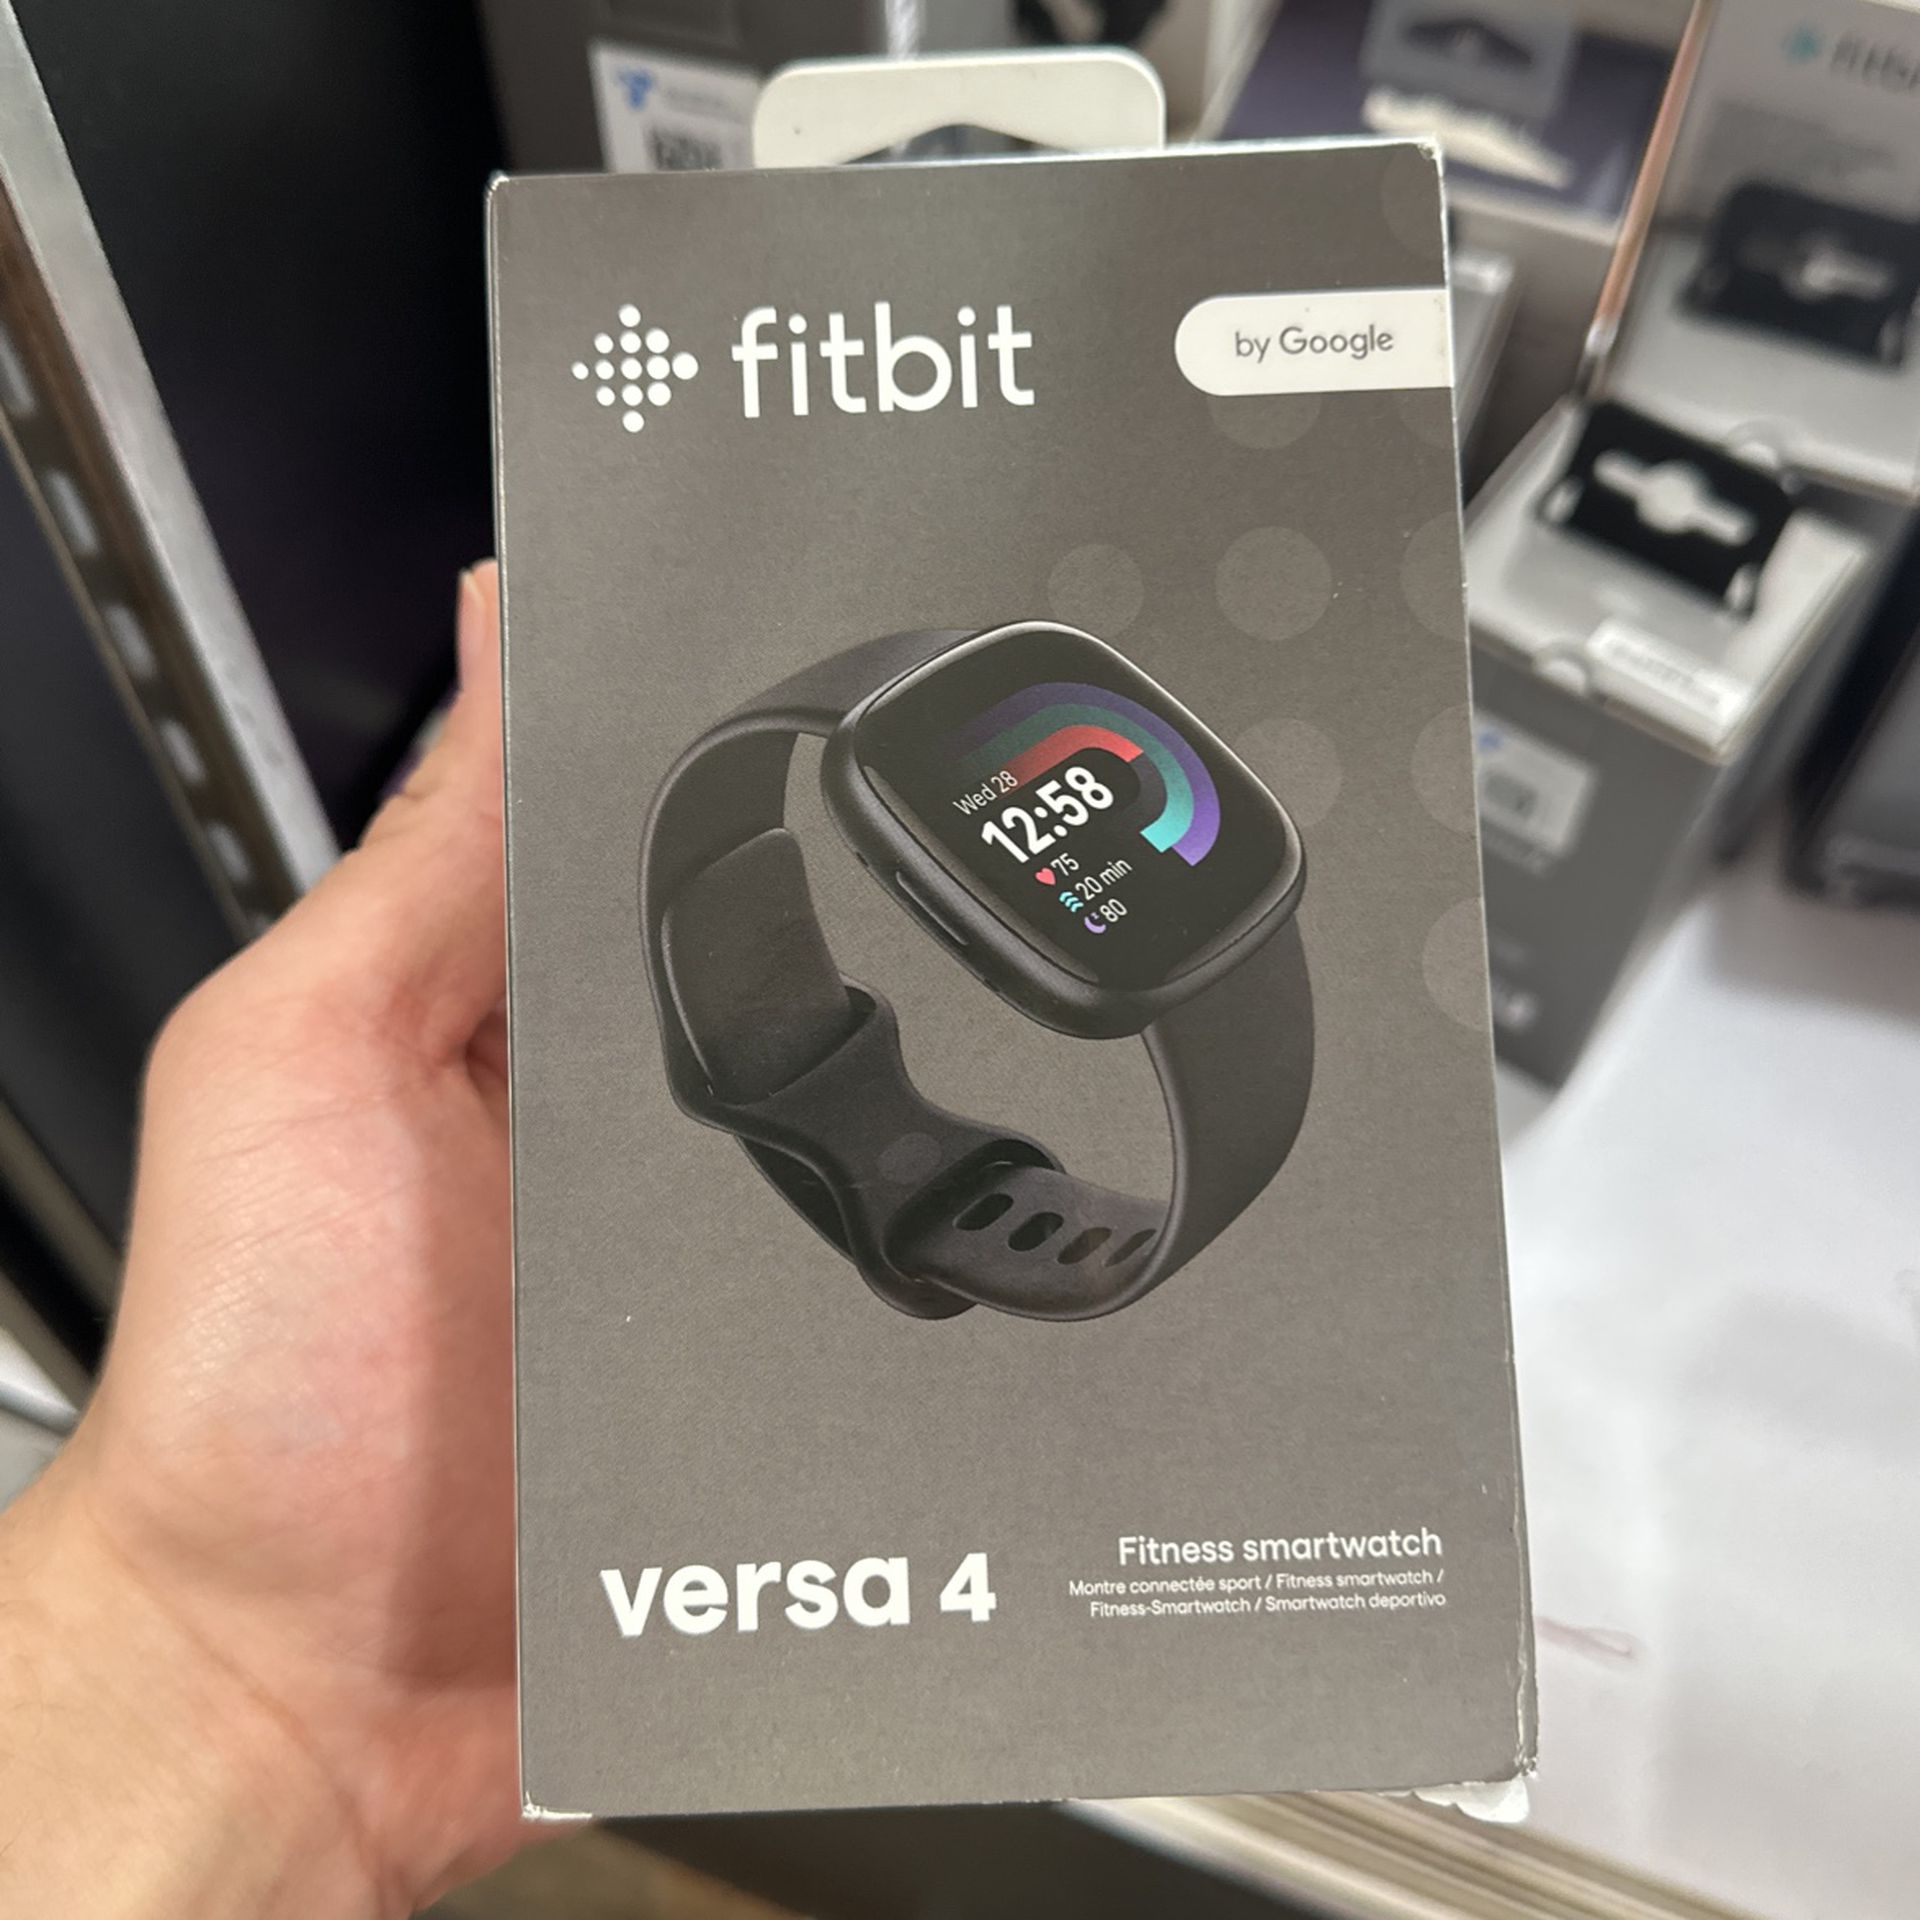 Fitbit Versa 4 Fitness Smartwatch - Black/Graphite Aluminum for